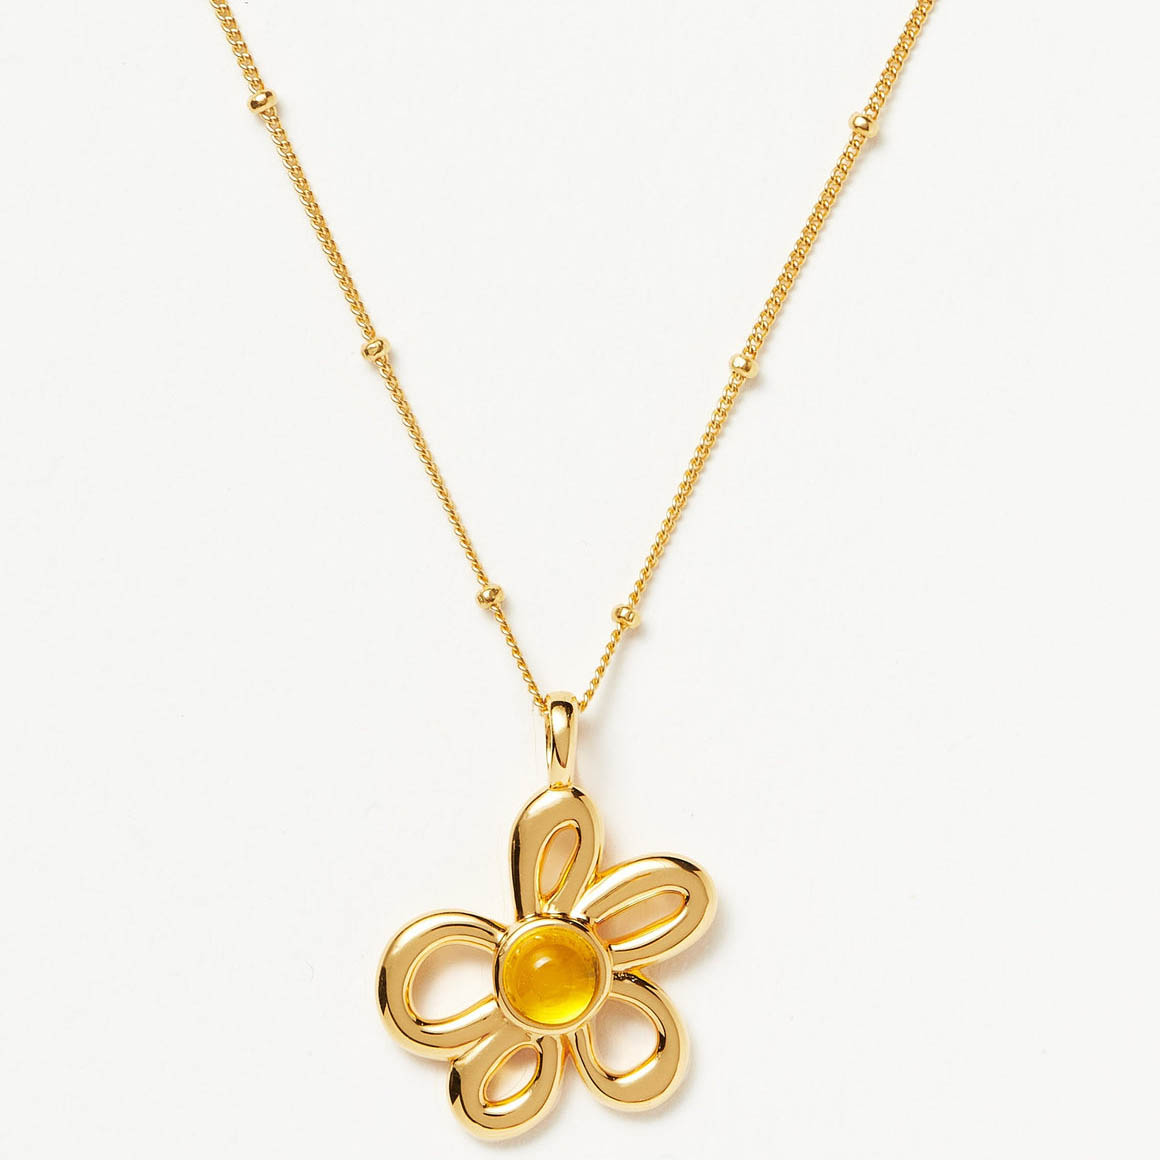 Custom wholesale retro flower pendant necklaces 18k gold plated vermeil on 925 silver